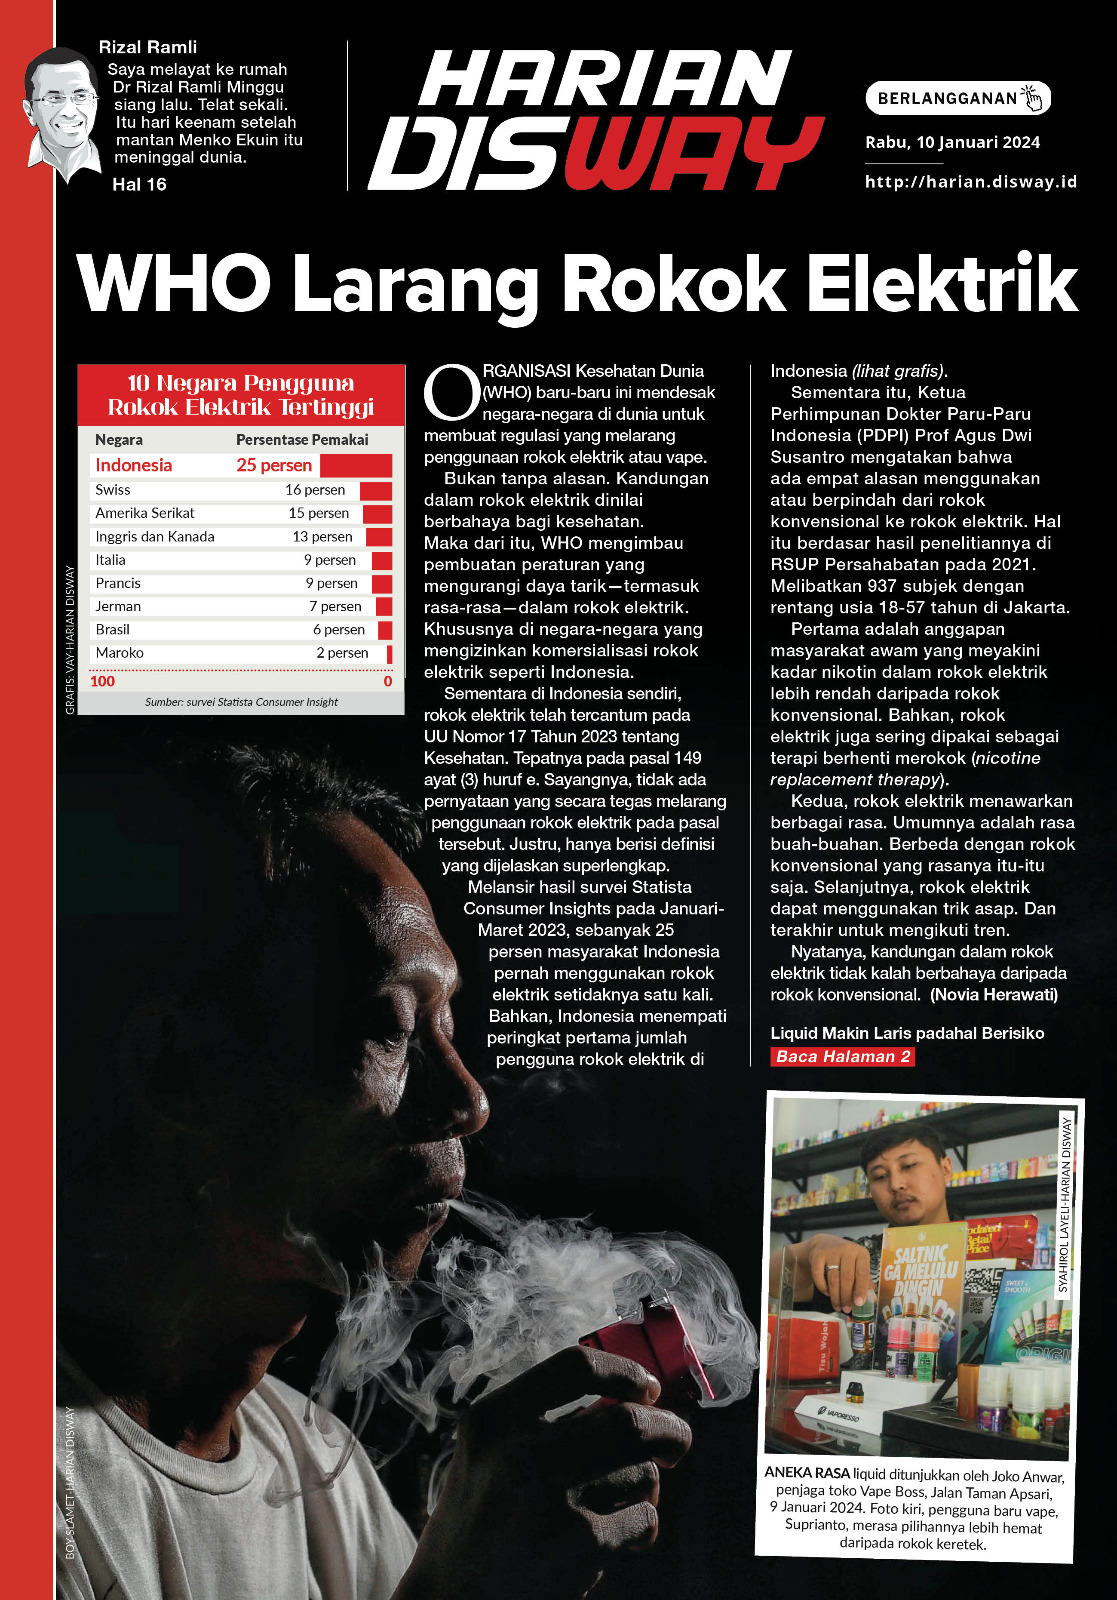 WHO Larang Rokok Elektrik